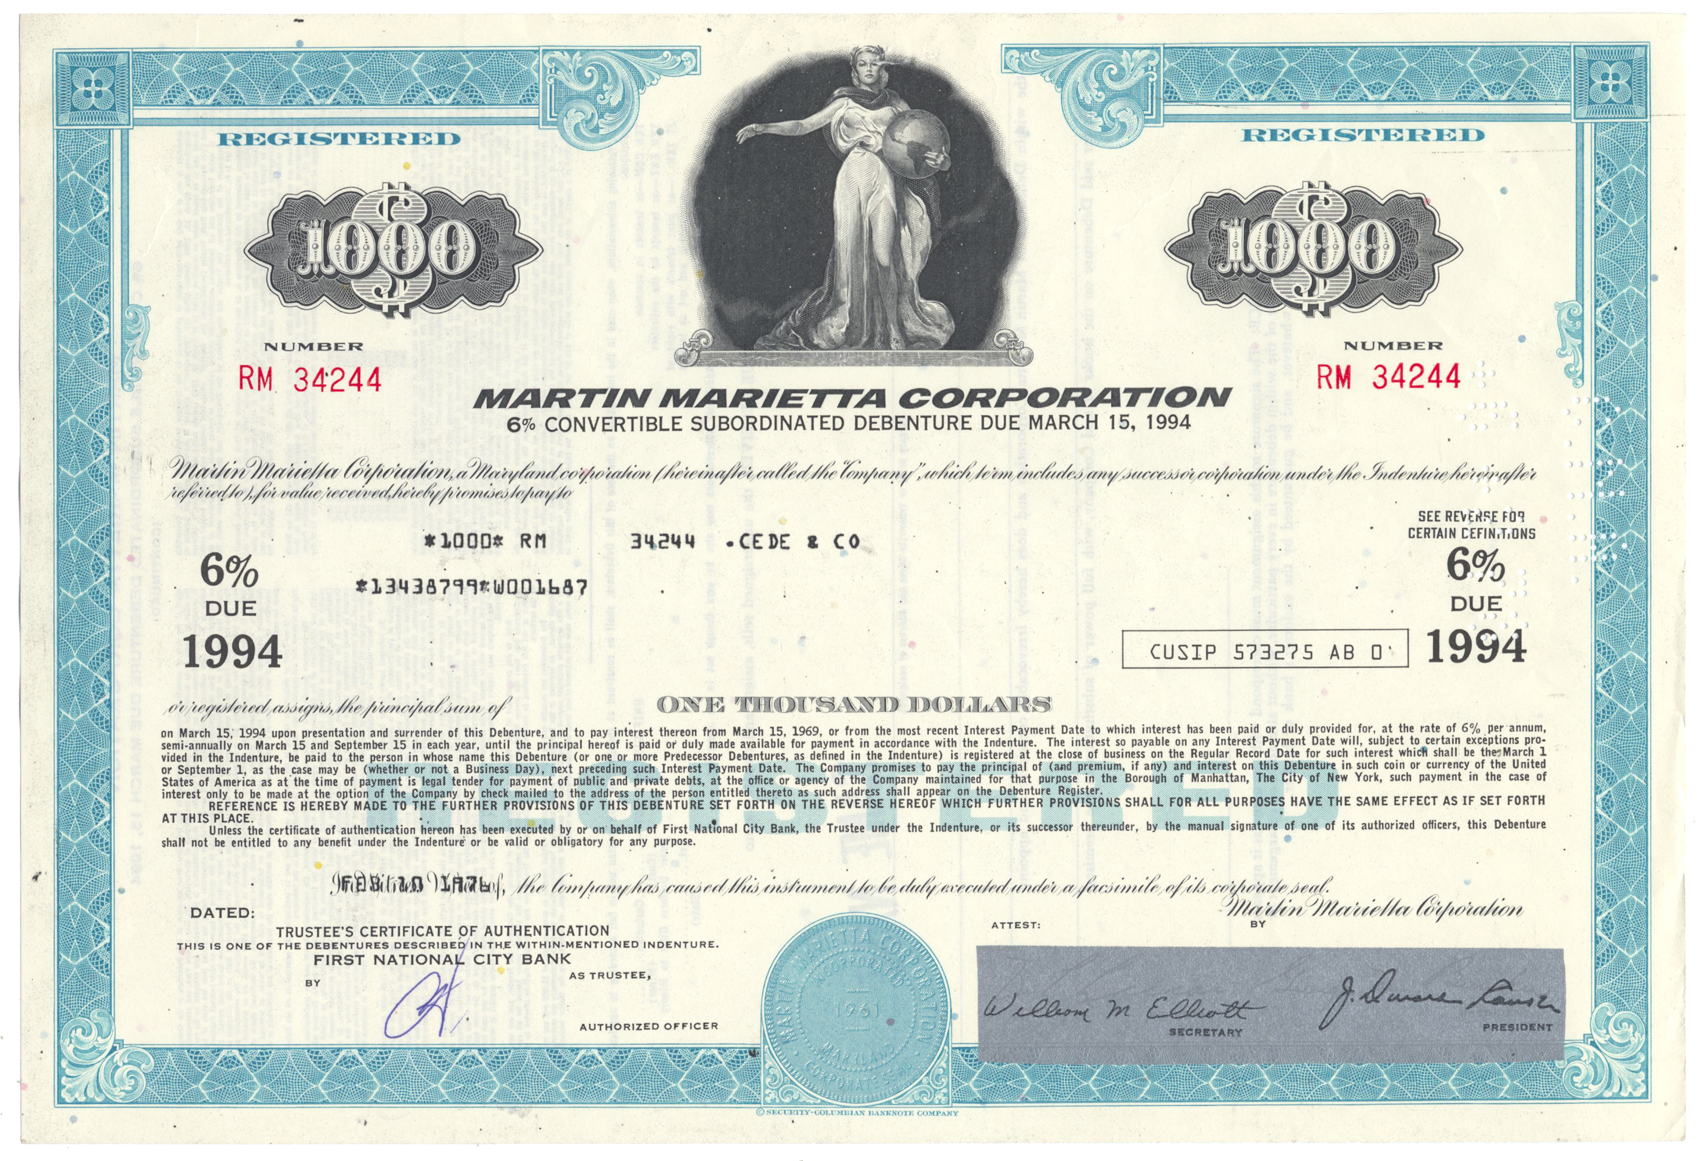 Martin-Marietta Corporation Bond Certificate